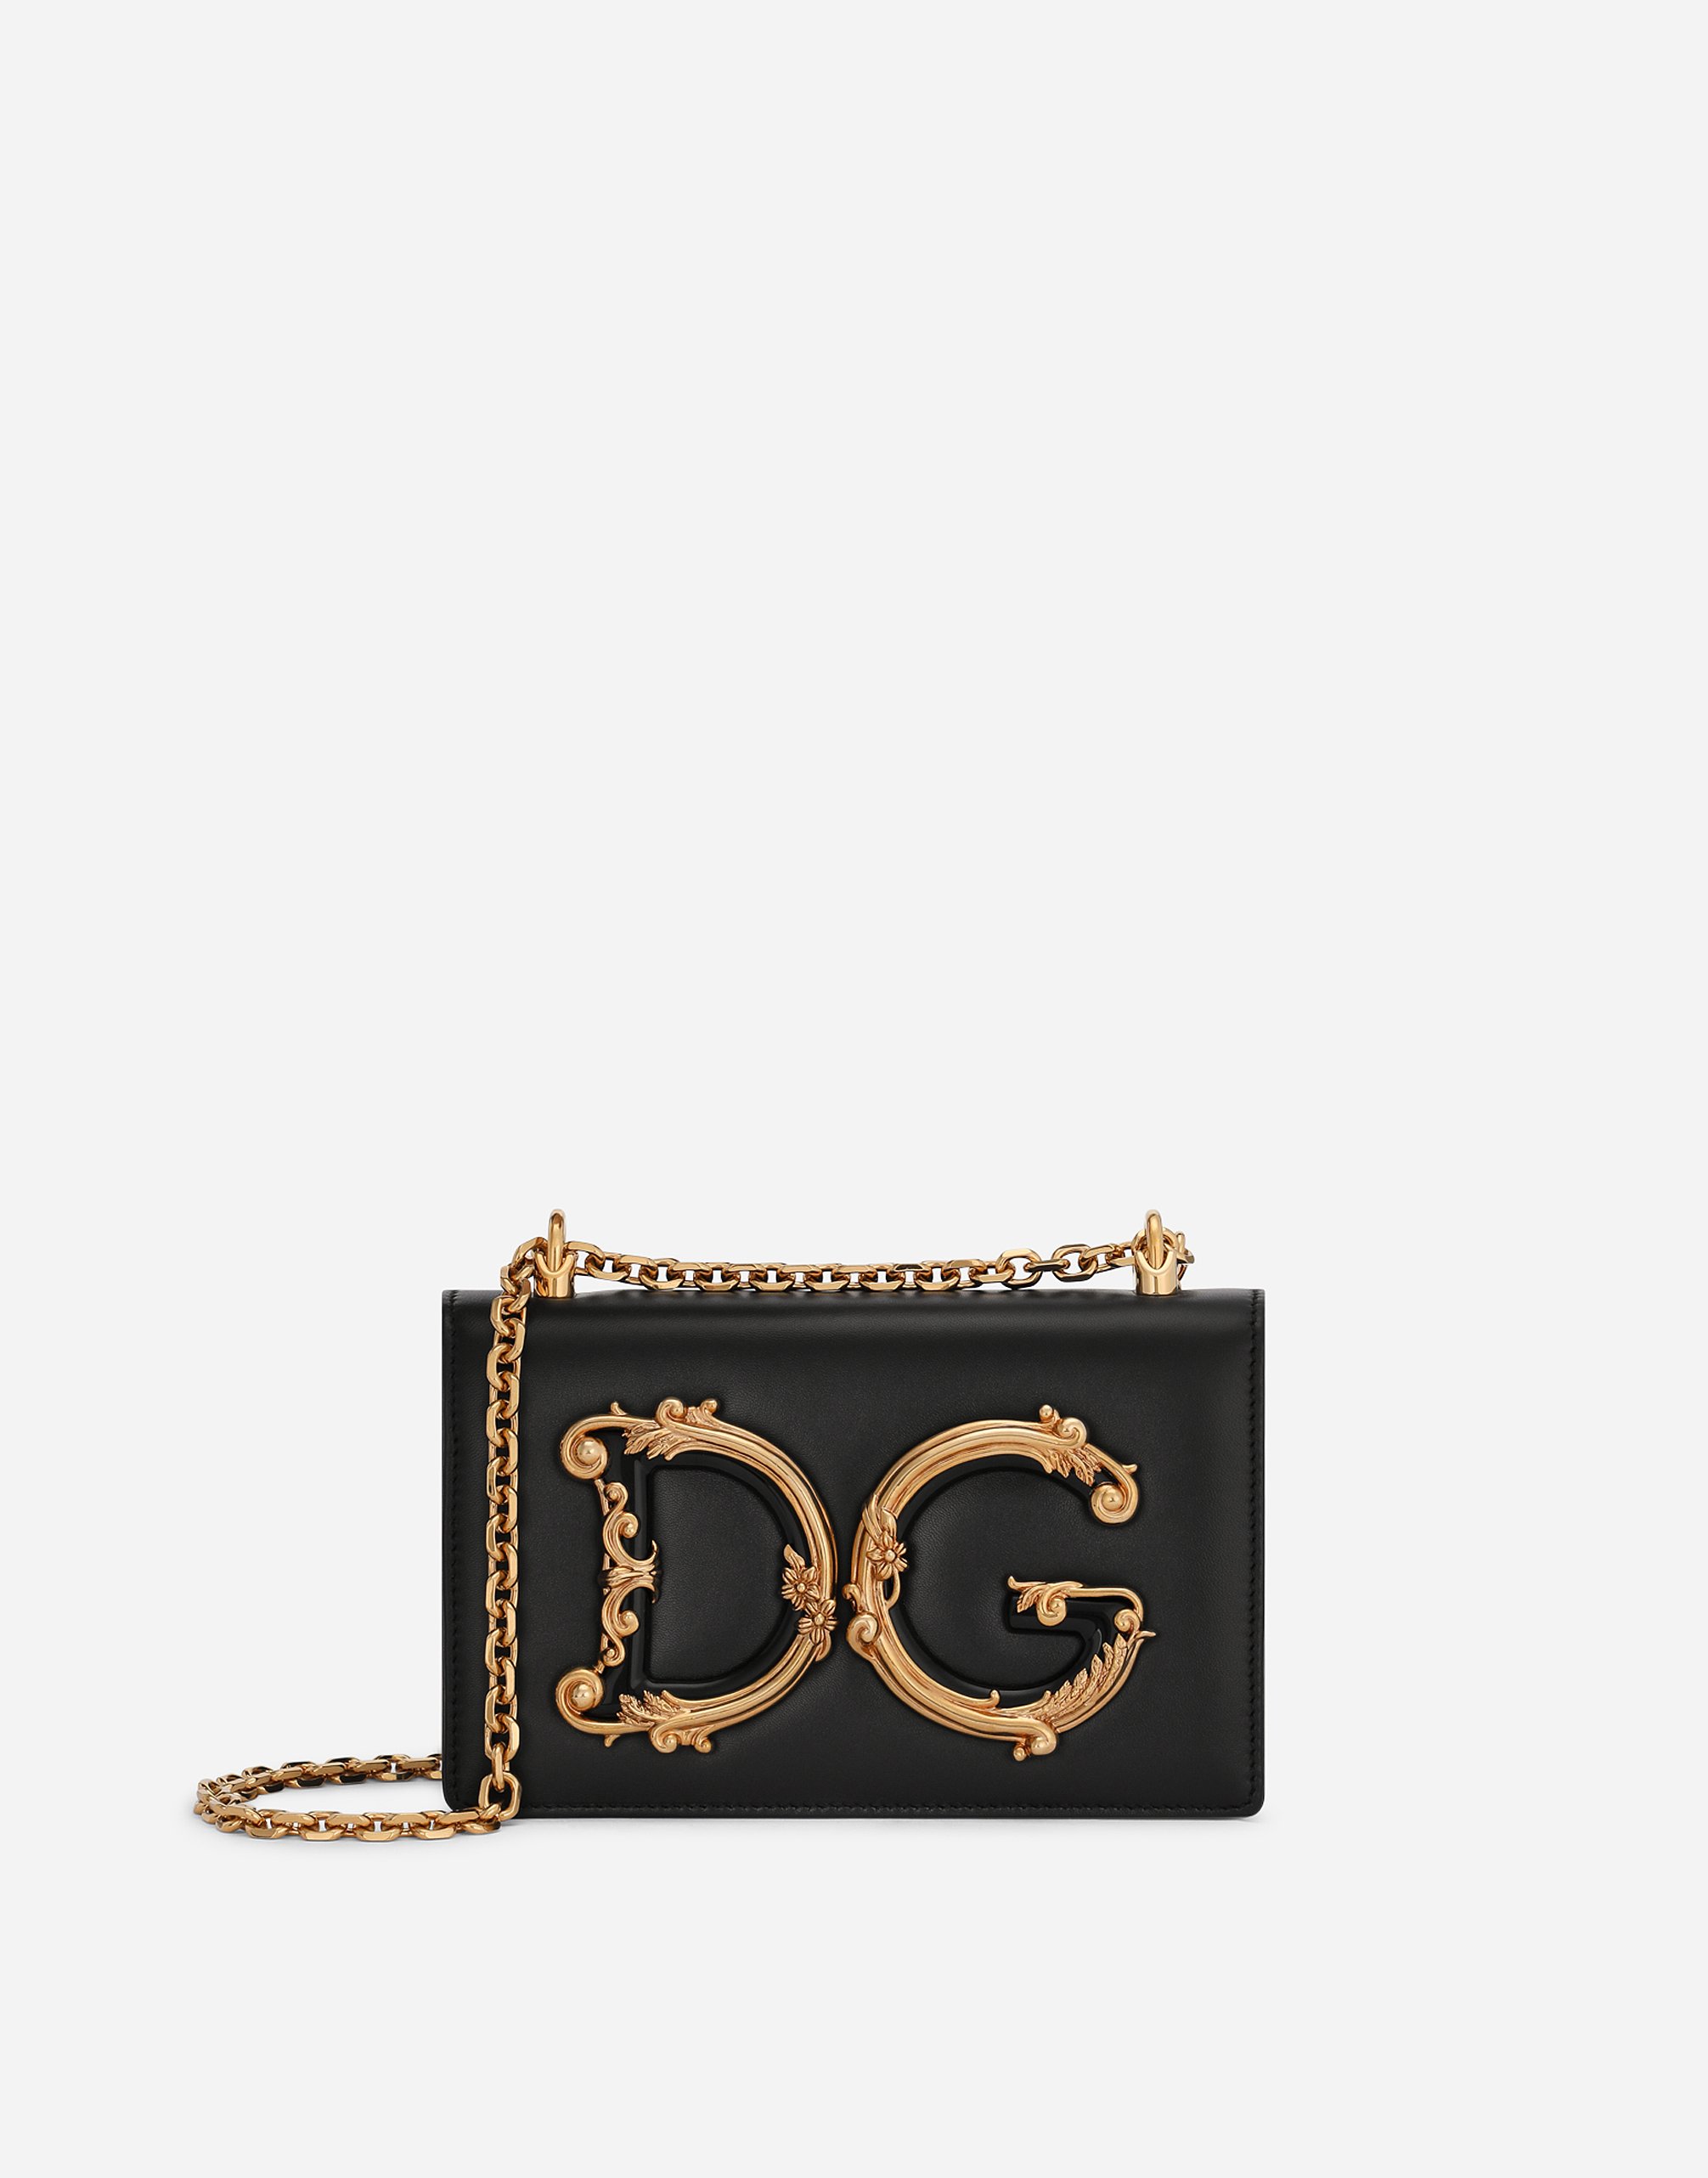 DG Girls shoulder bag in nappa leather in Black